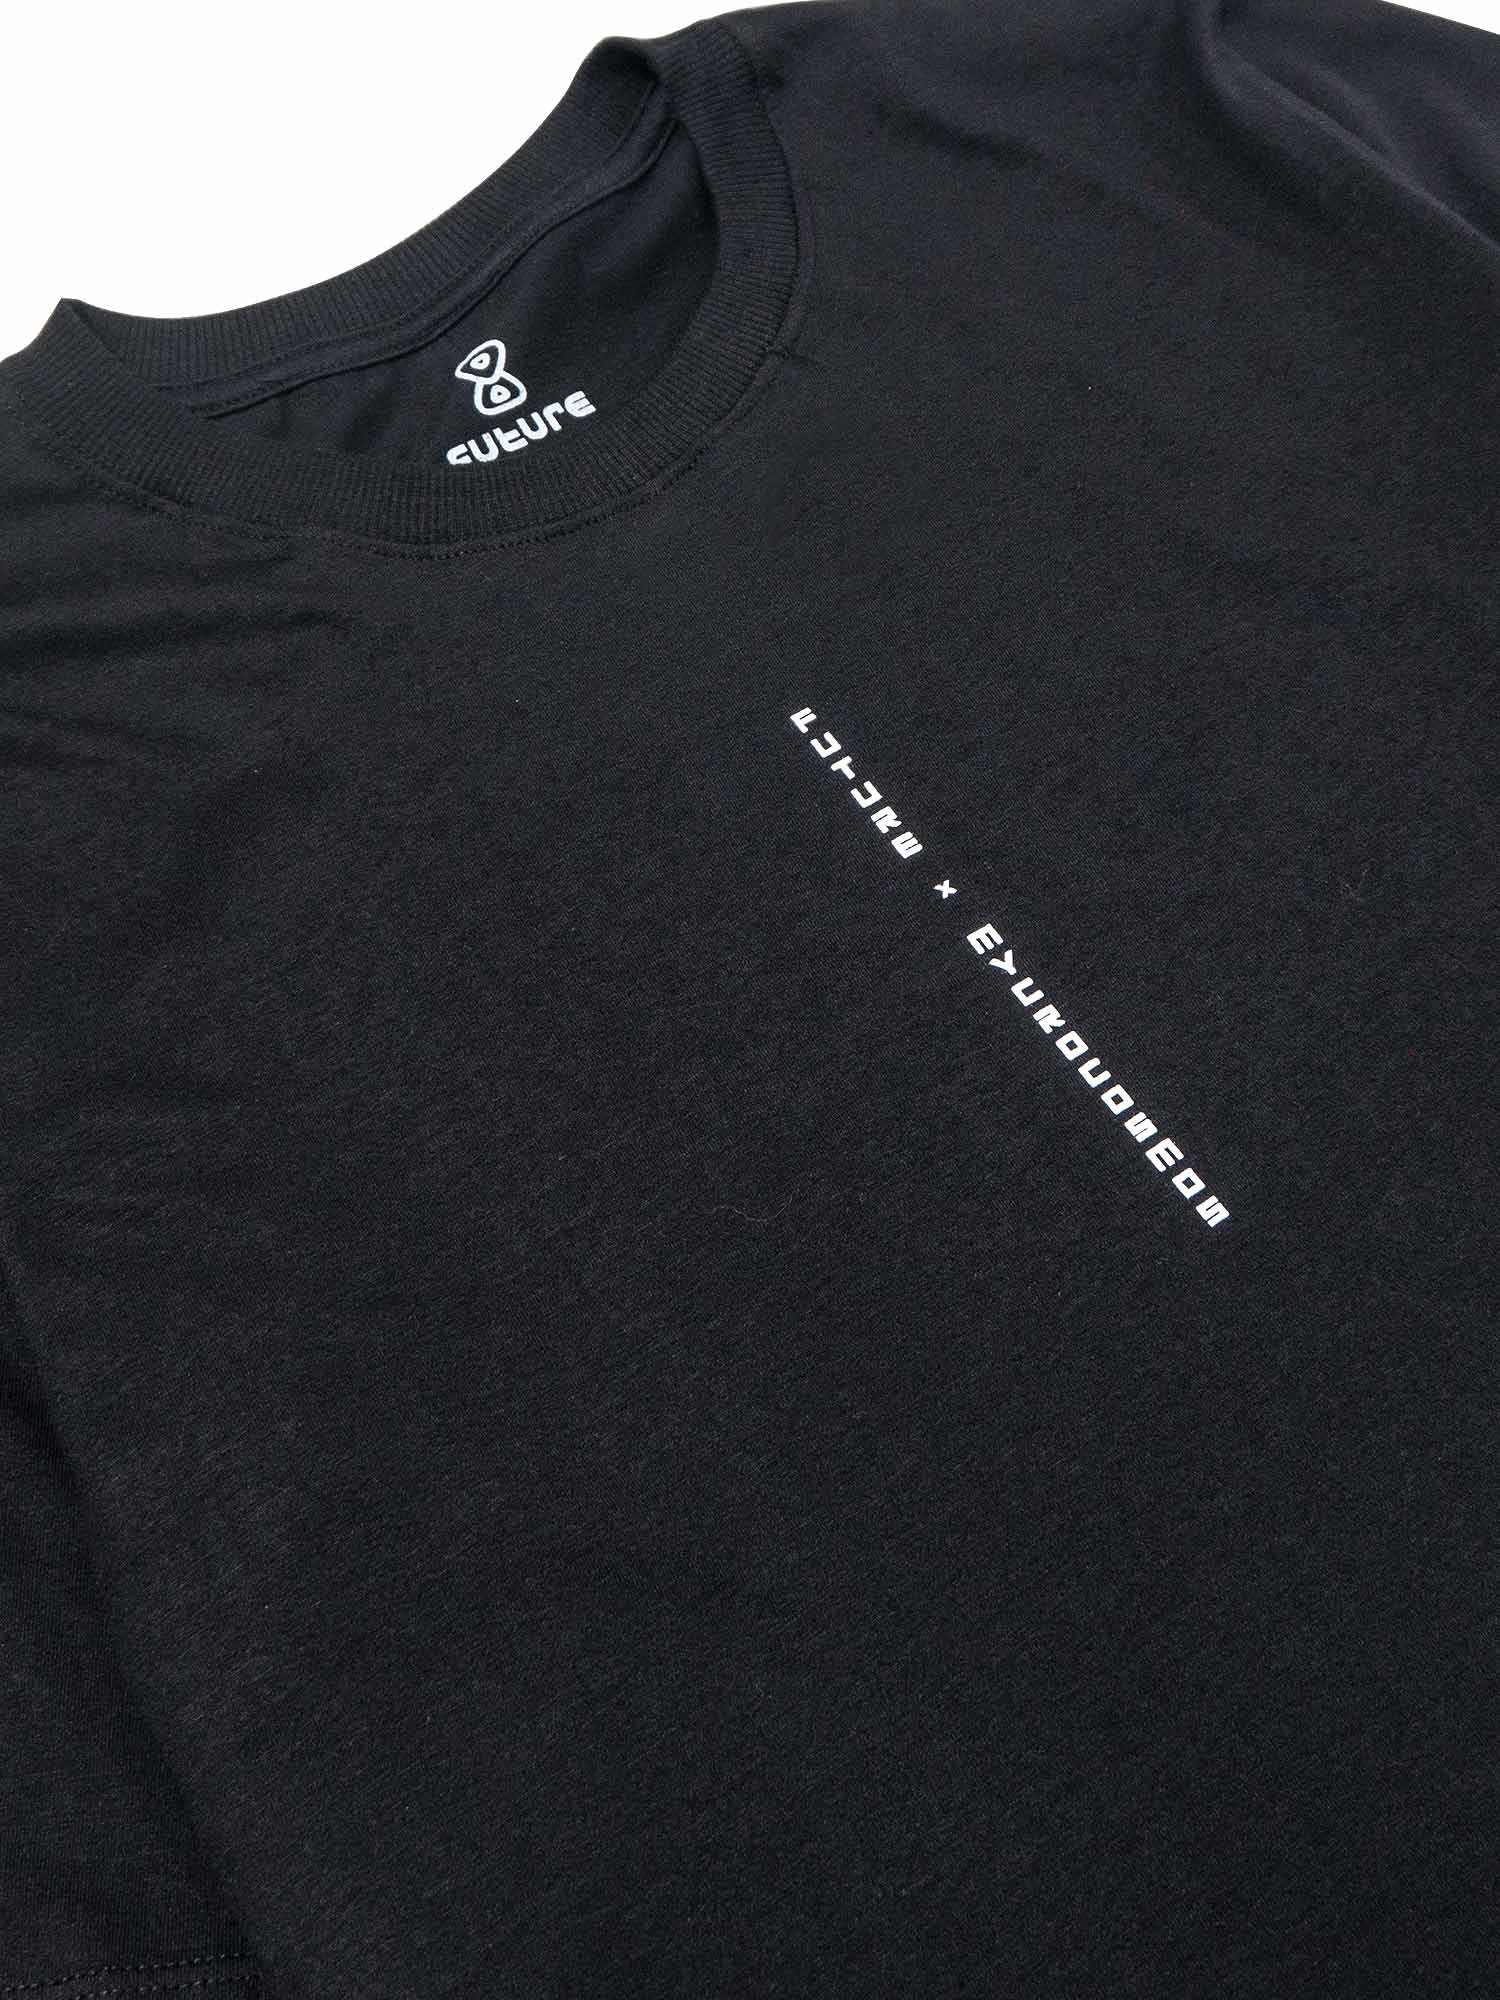 Camiseta-Future-Mycrocosmos-Preta-Frente-Close